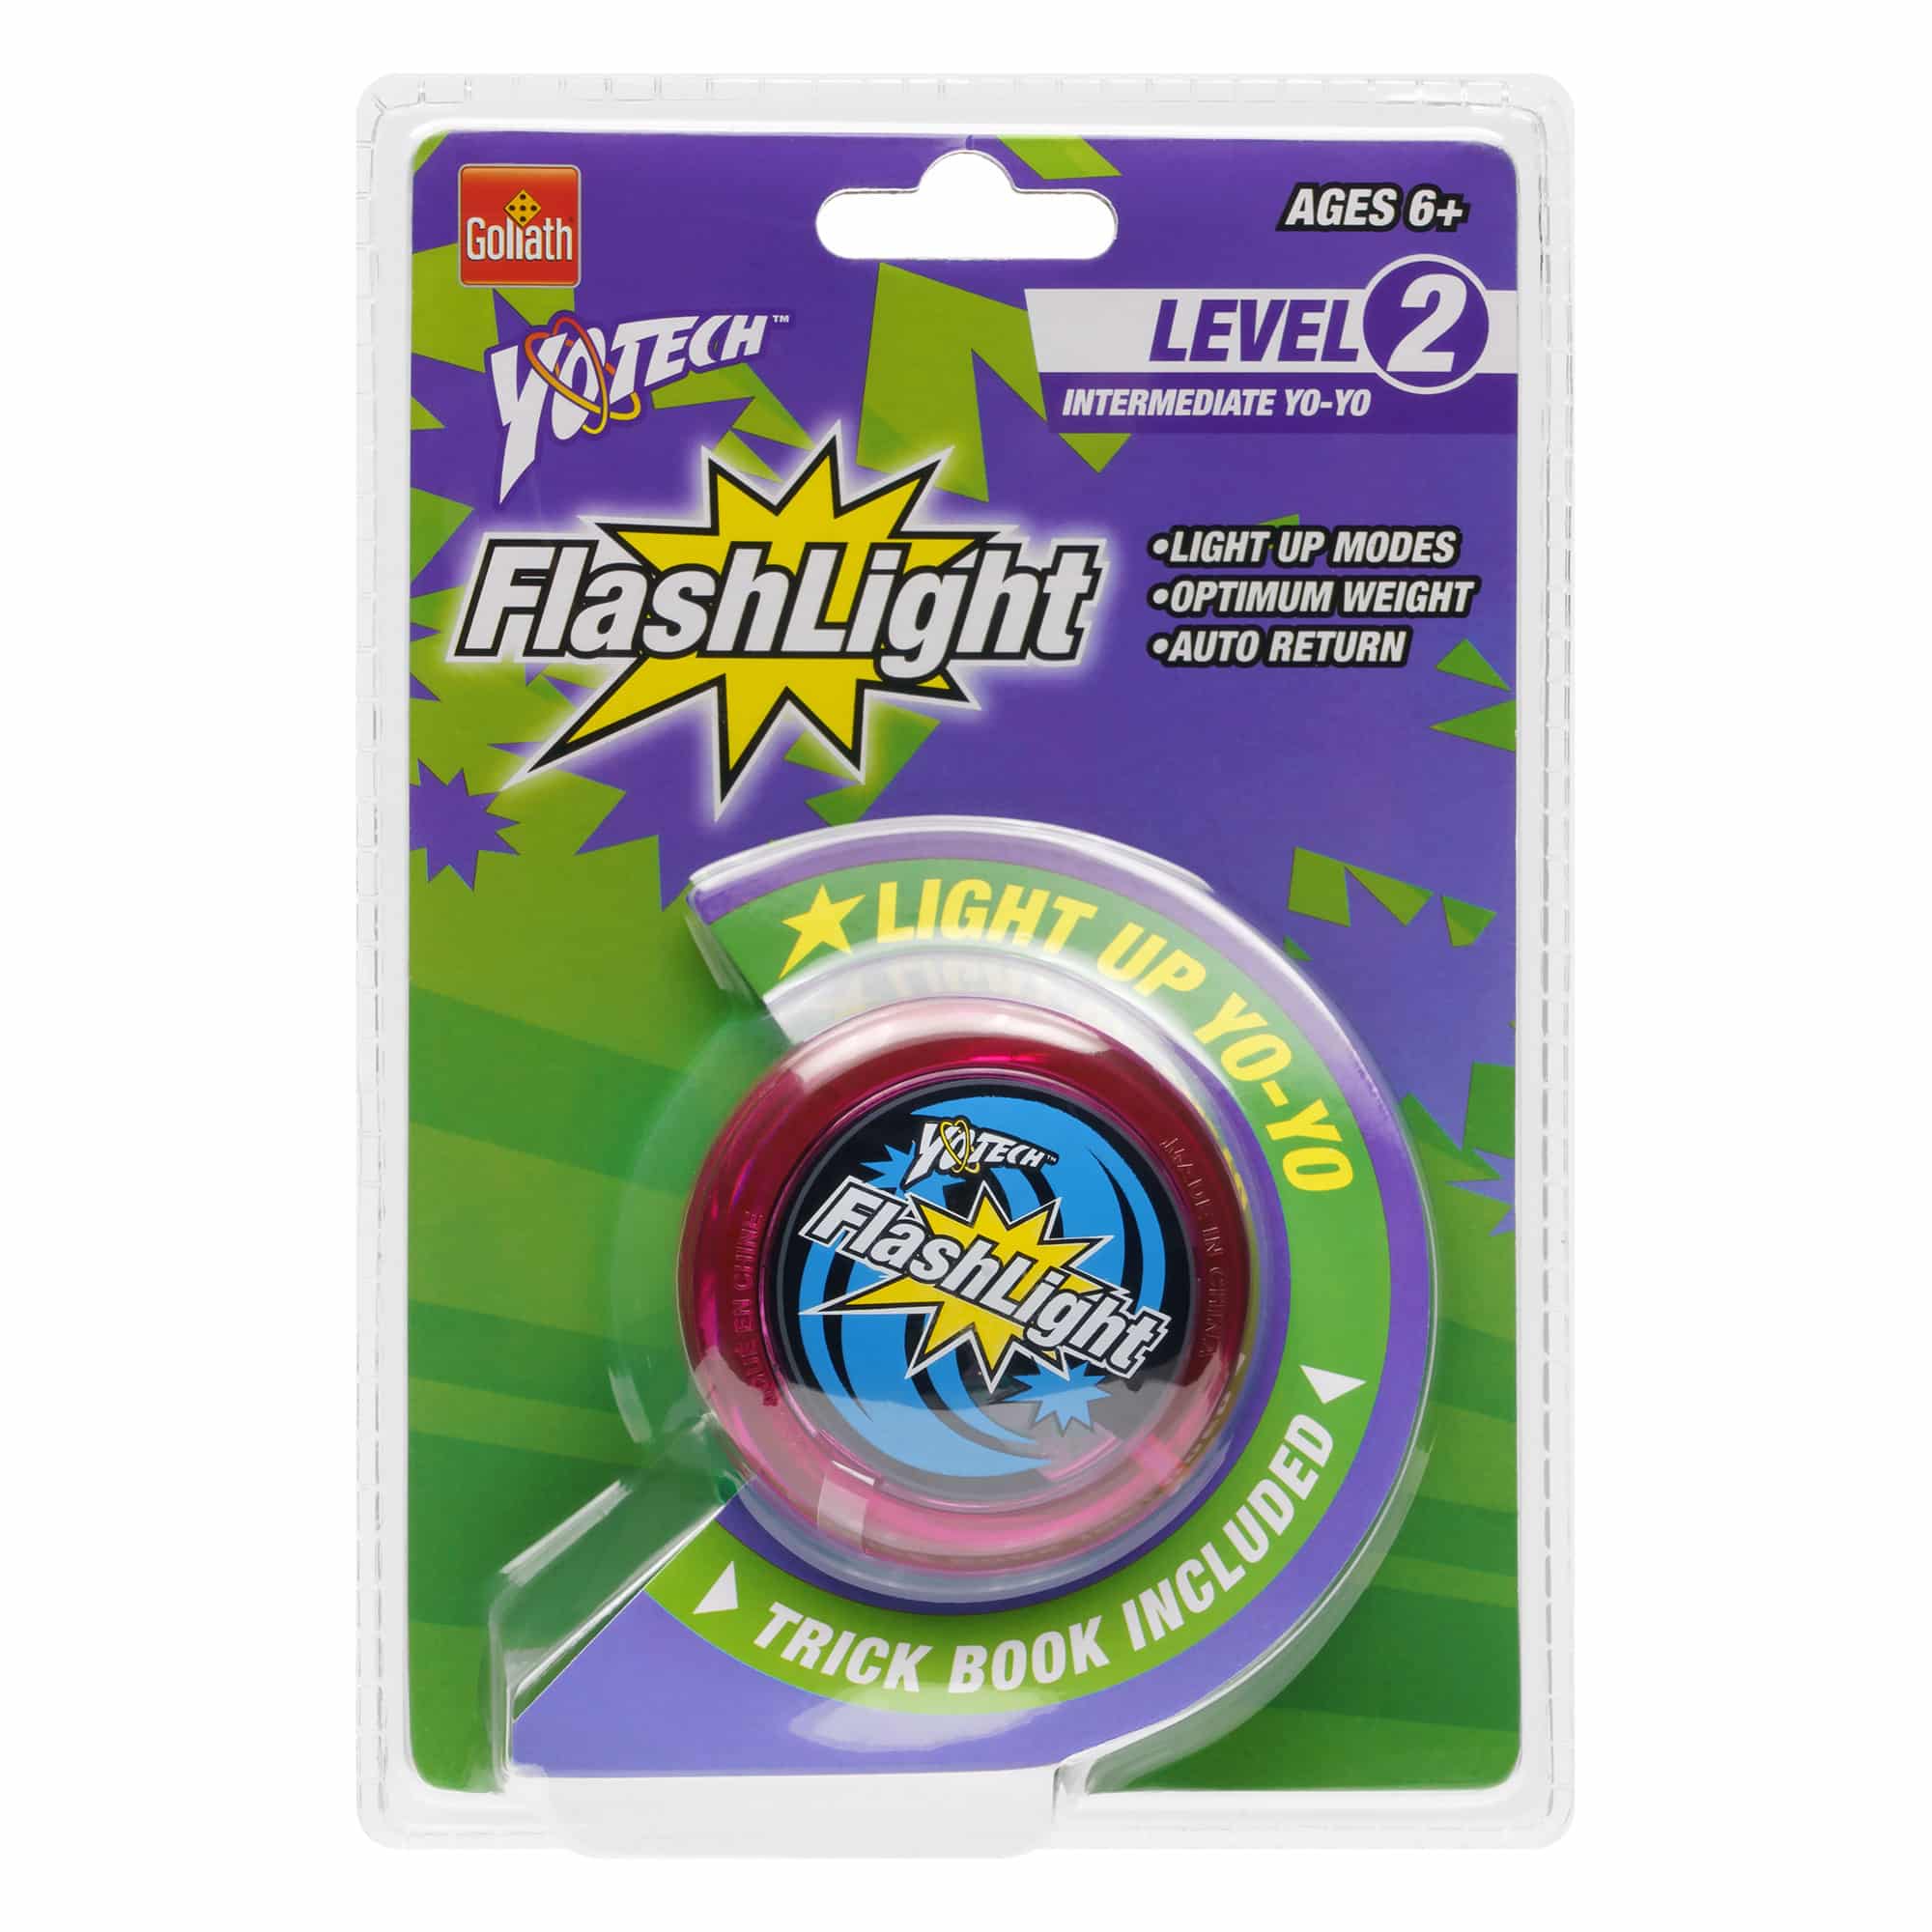 Yotech - FlashLIGHT Level 2 YoYo - Red